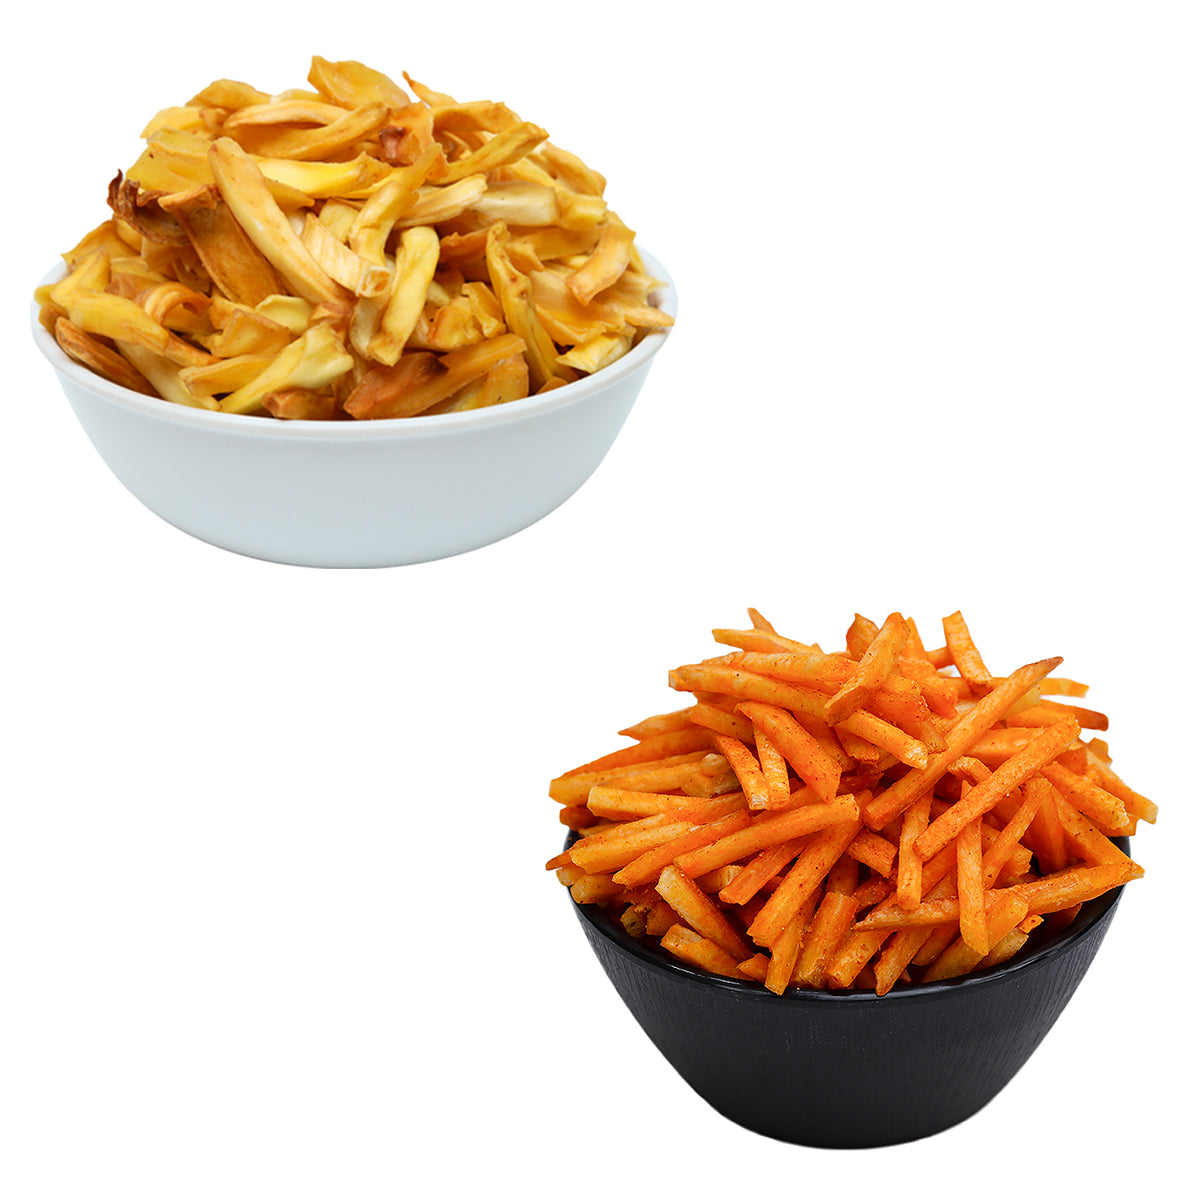 Kerala Chips Combo - Jackfruit Chips (500g) & Tapioca Chips (500g) - 1kg